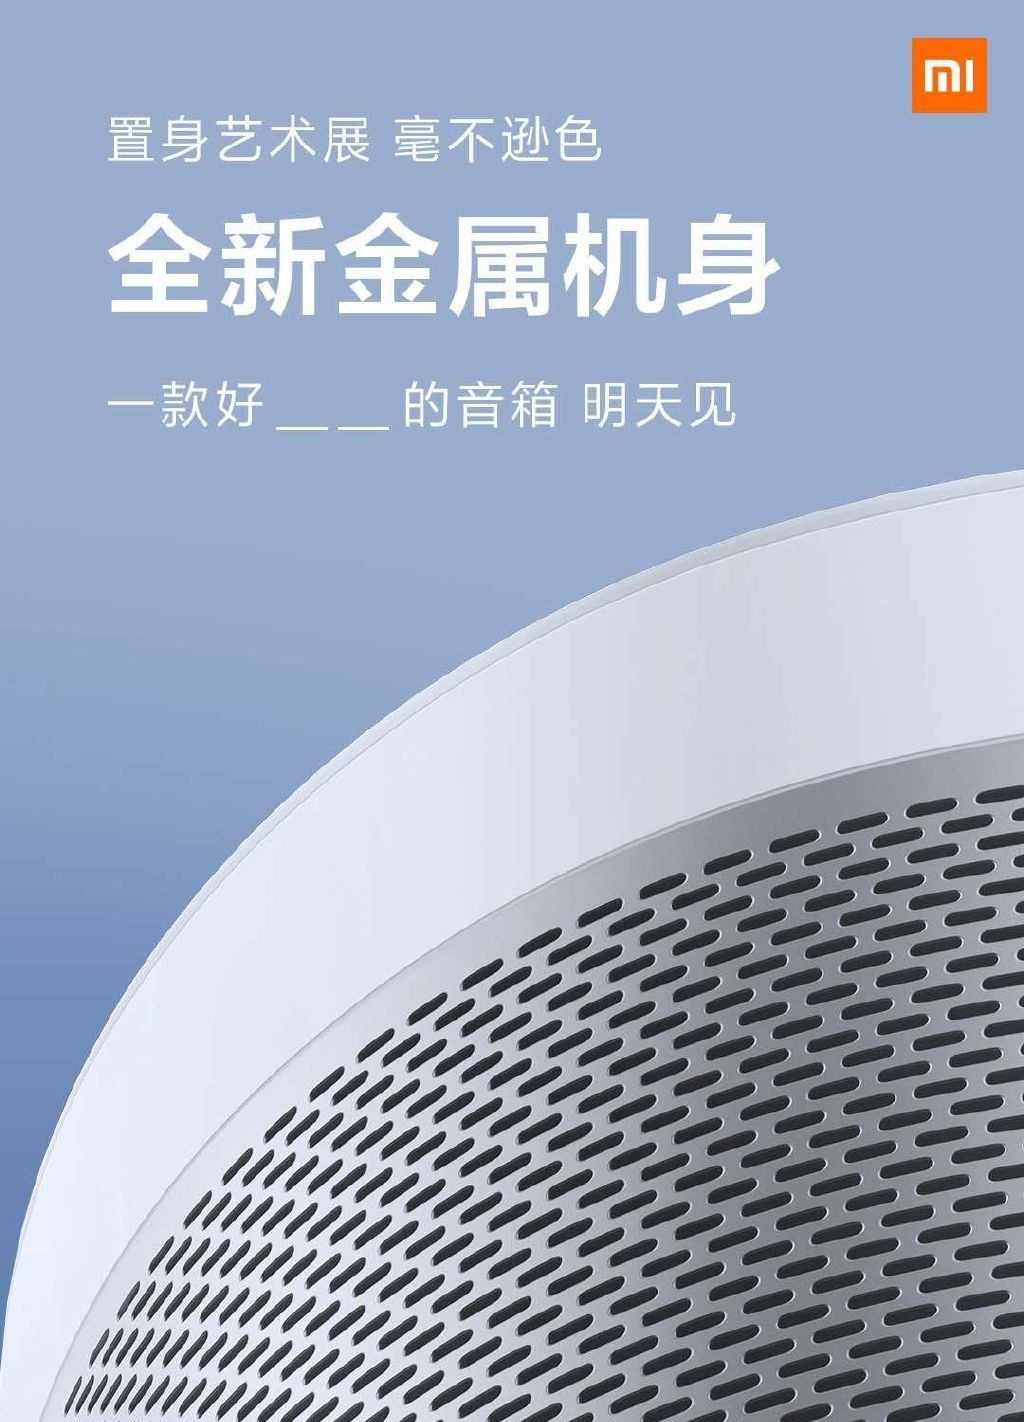 New XiaoAI Speaker Metal Build